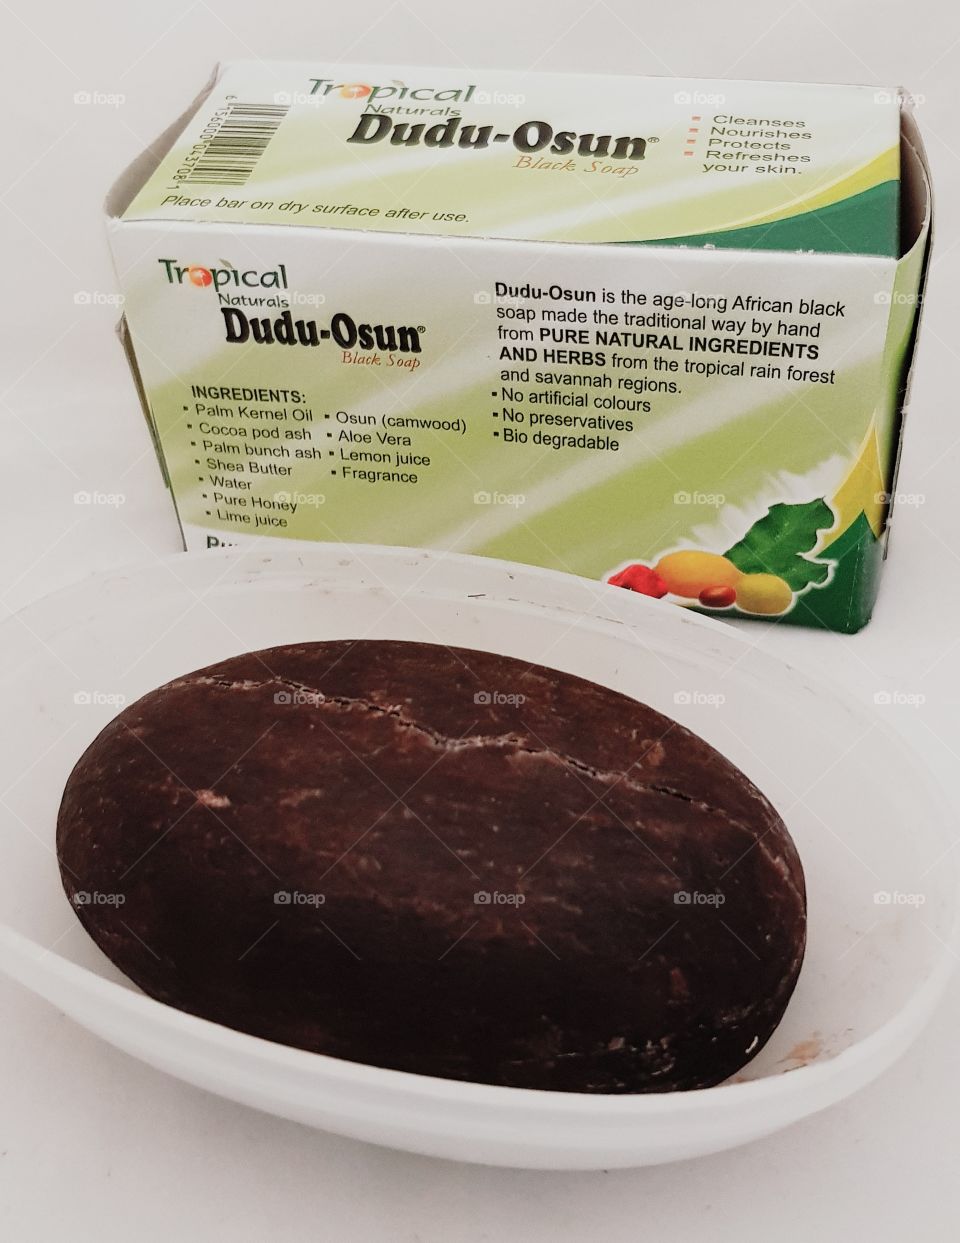 Tropical Naturals Dudu-osun traditional African black soap